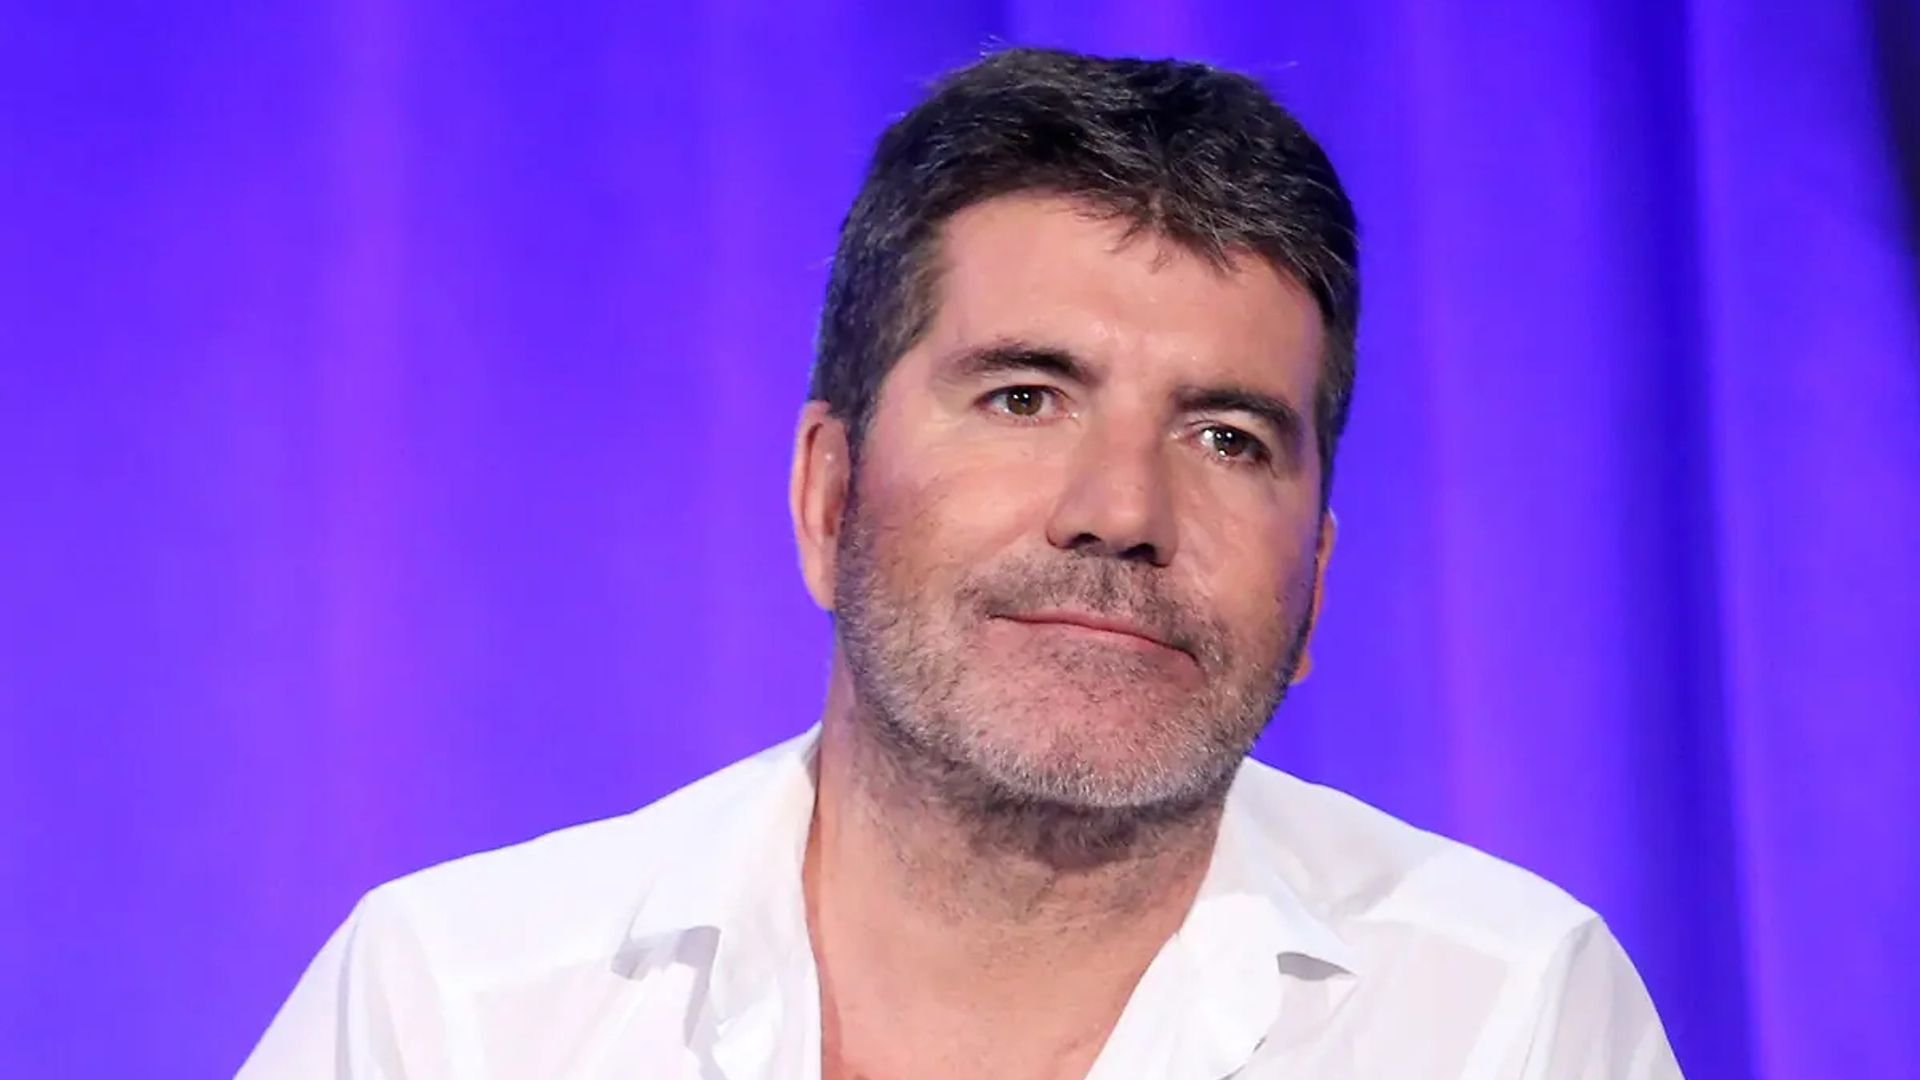 Simon Cowell talks 'special' tribute to late America's Got Talent contestant Nightbirde